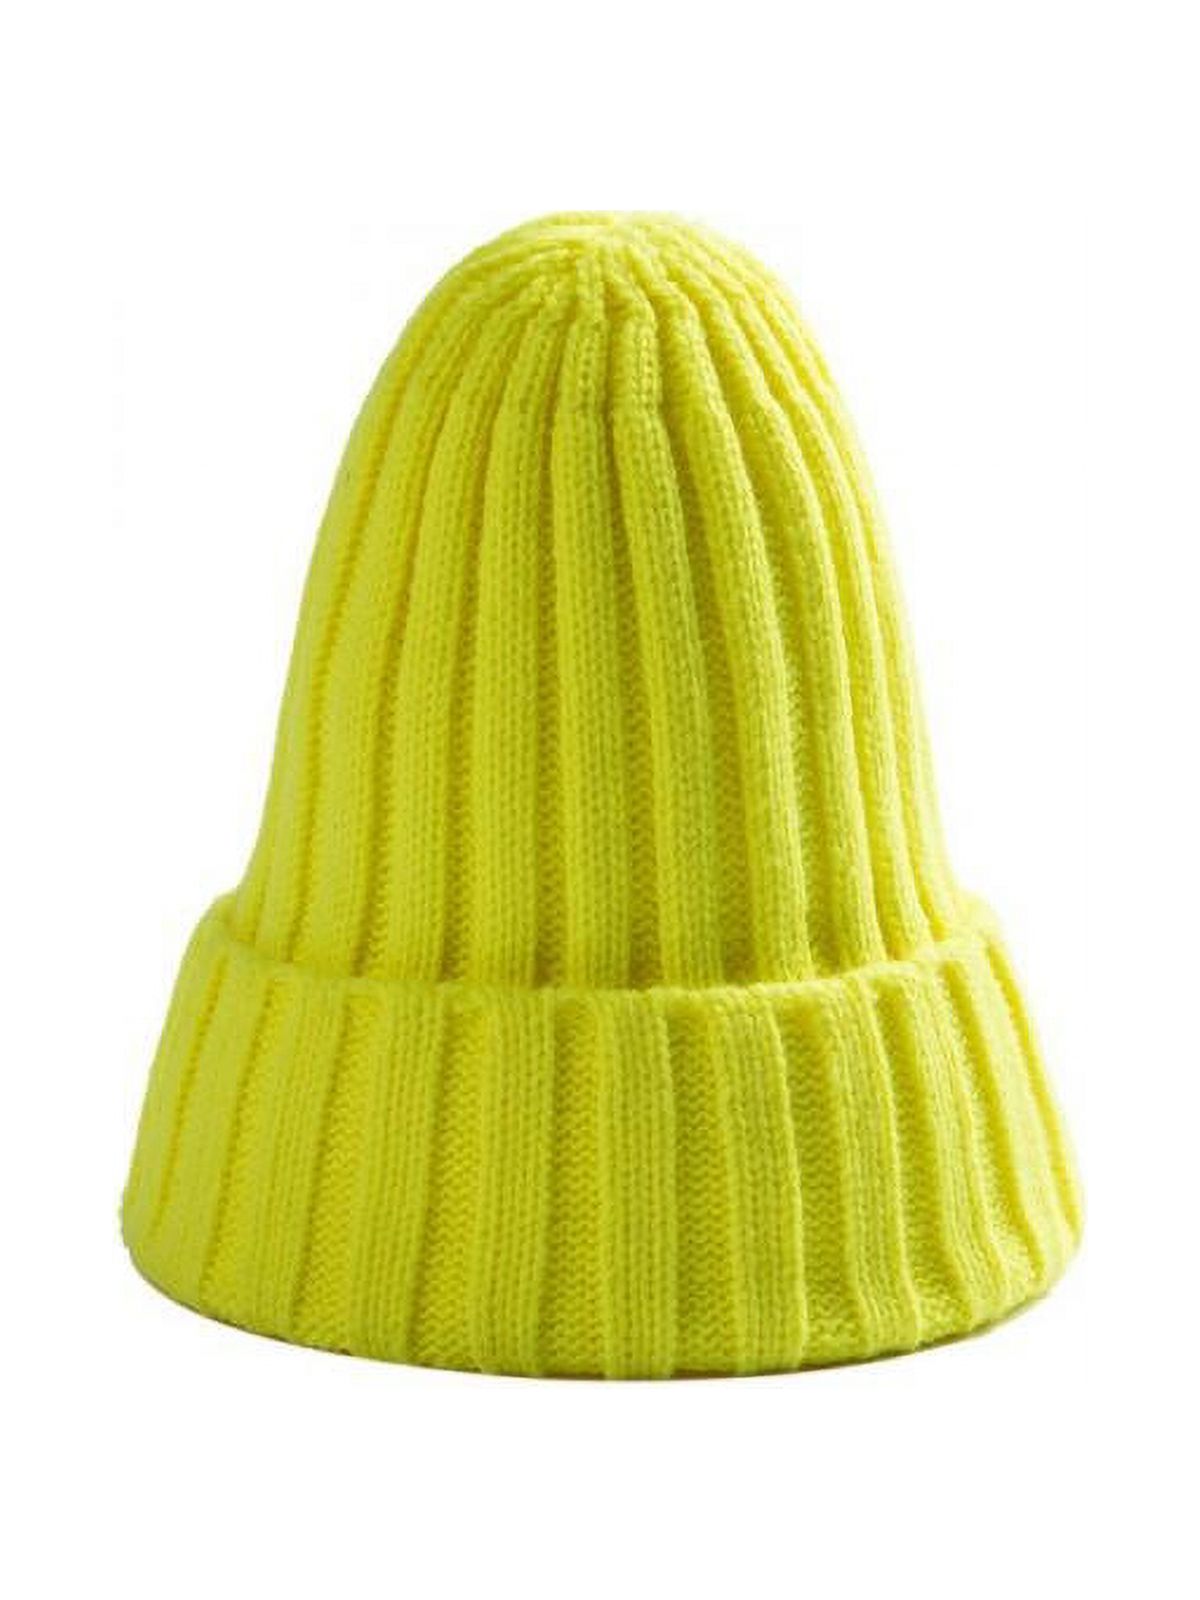 Ropalia Fashion Women Men Winter Knitted Beanies Cap Ski Hat Warm Crochet Knit Cap Hip-Hop Plain Hat - image 1 of 5